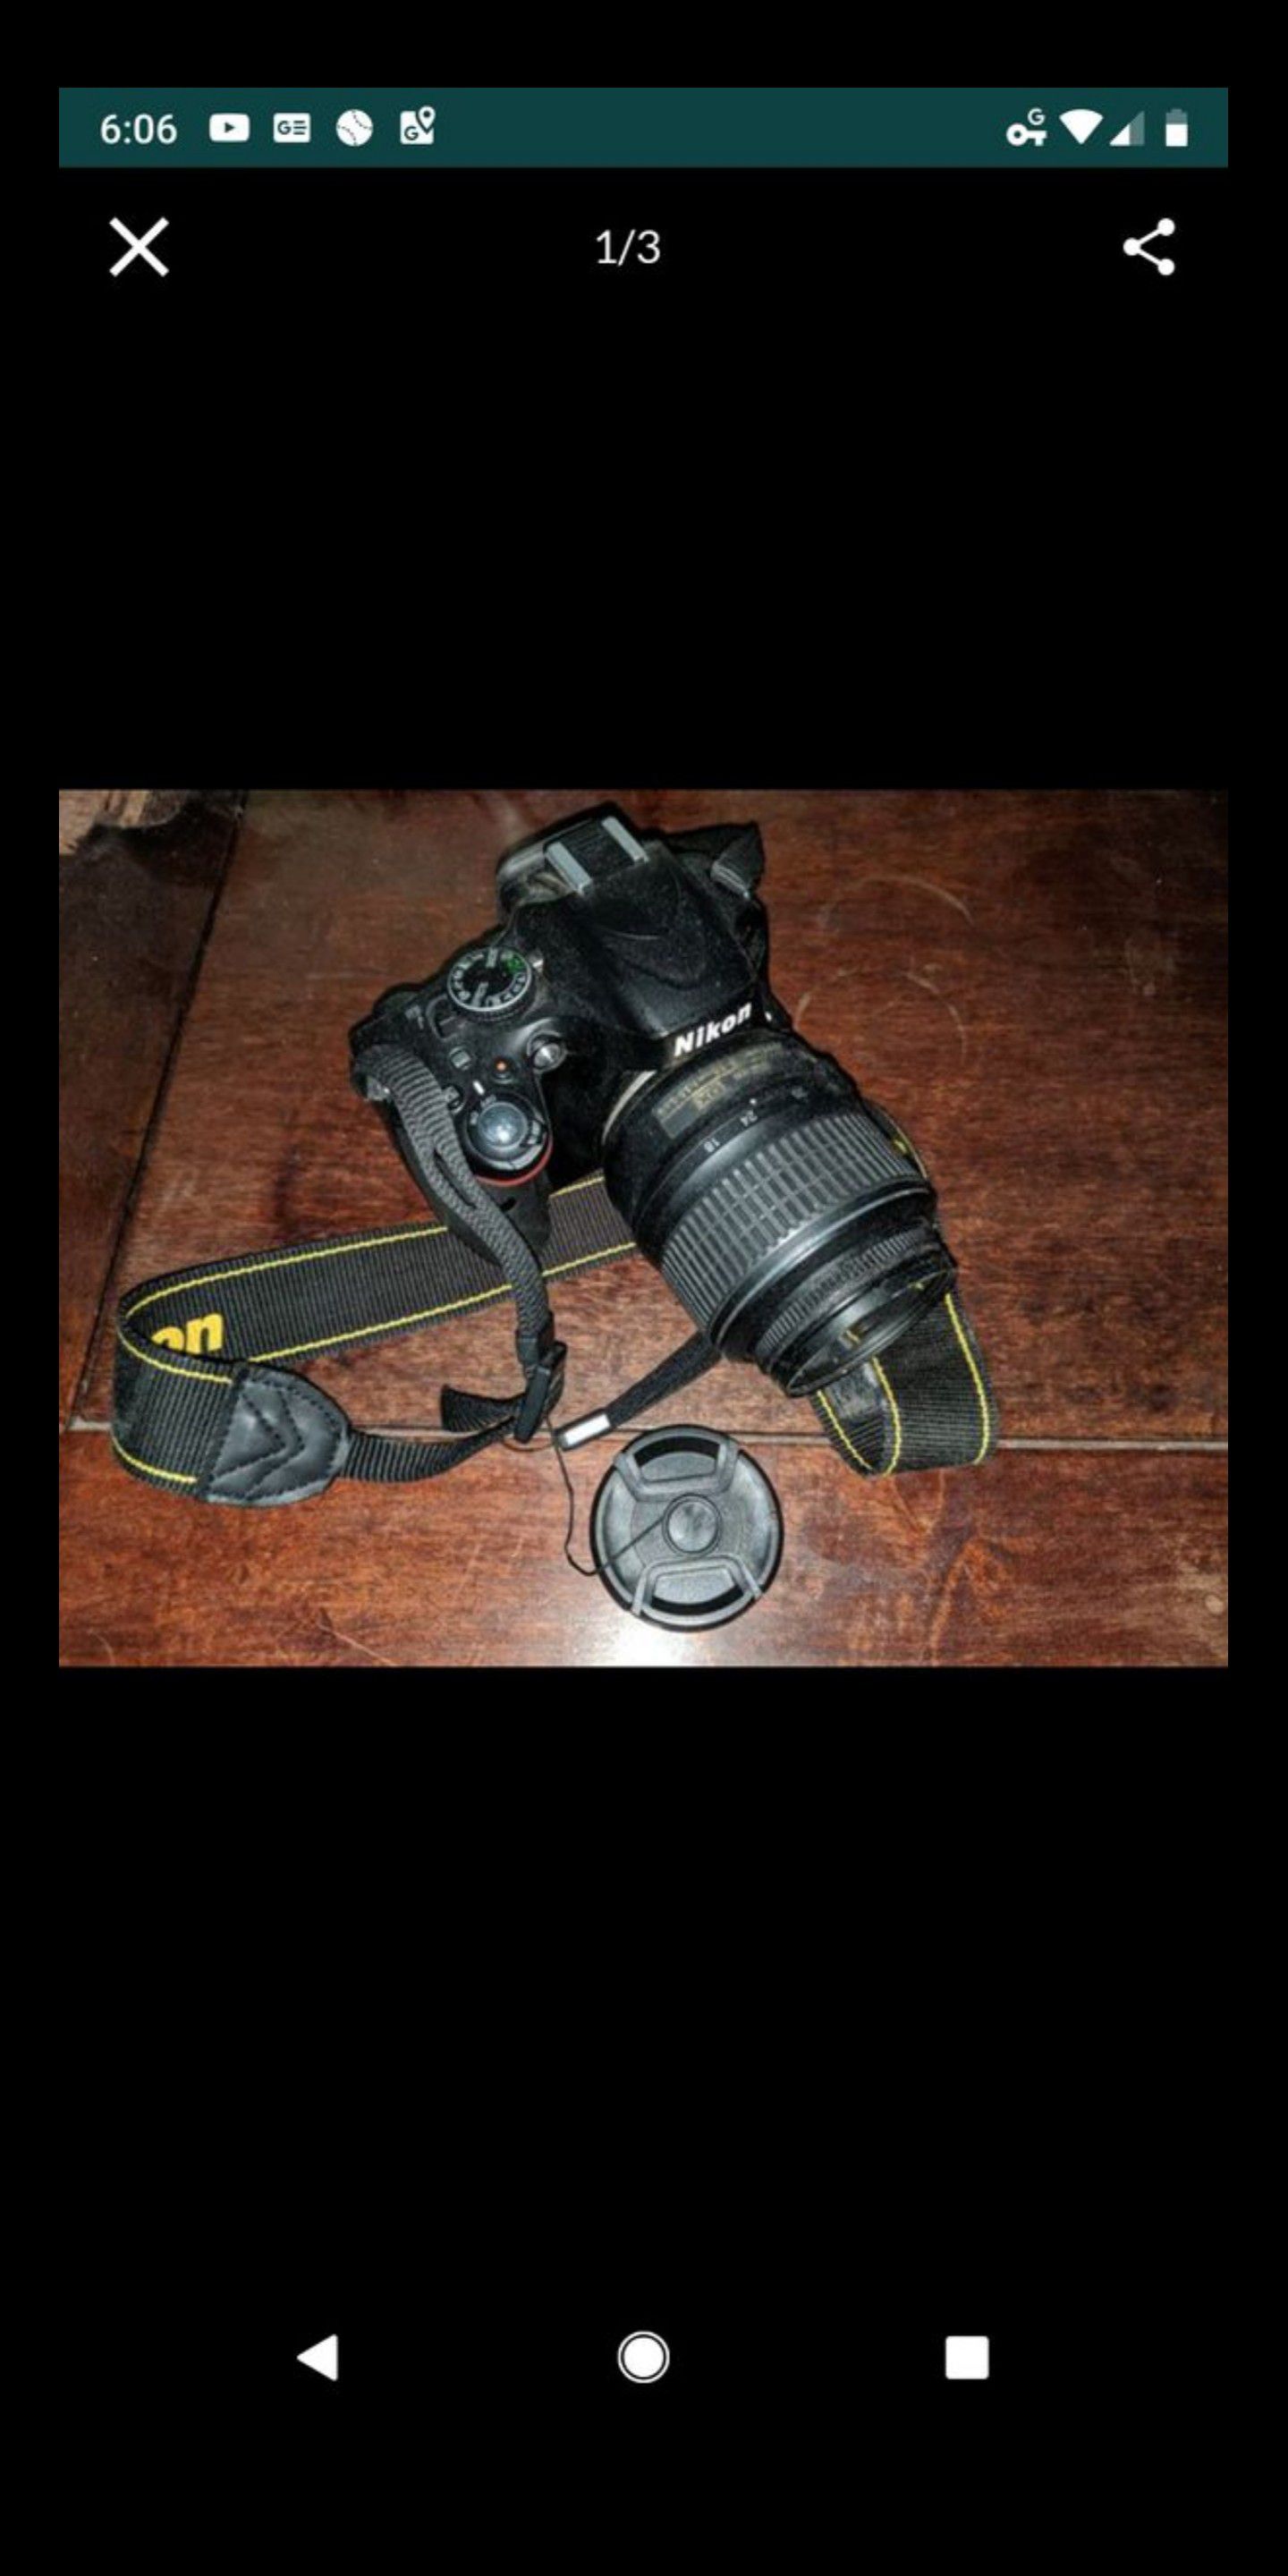 Nikon D5100 Digital Camera